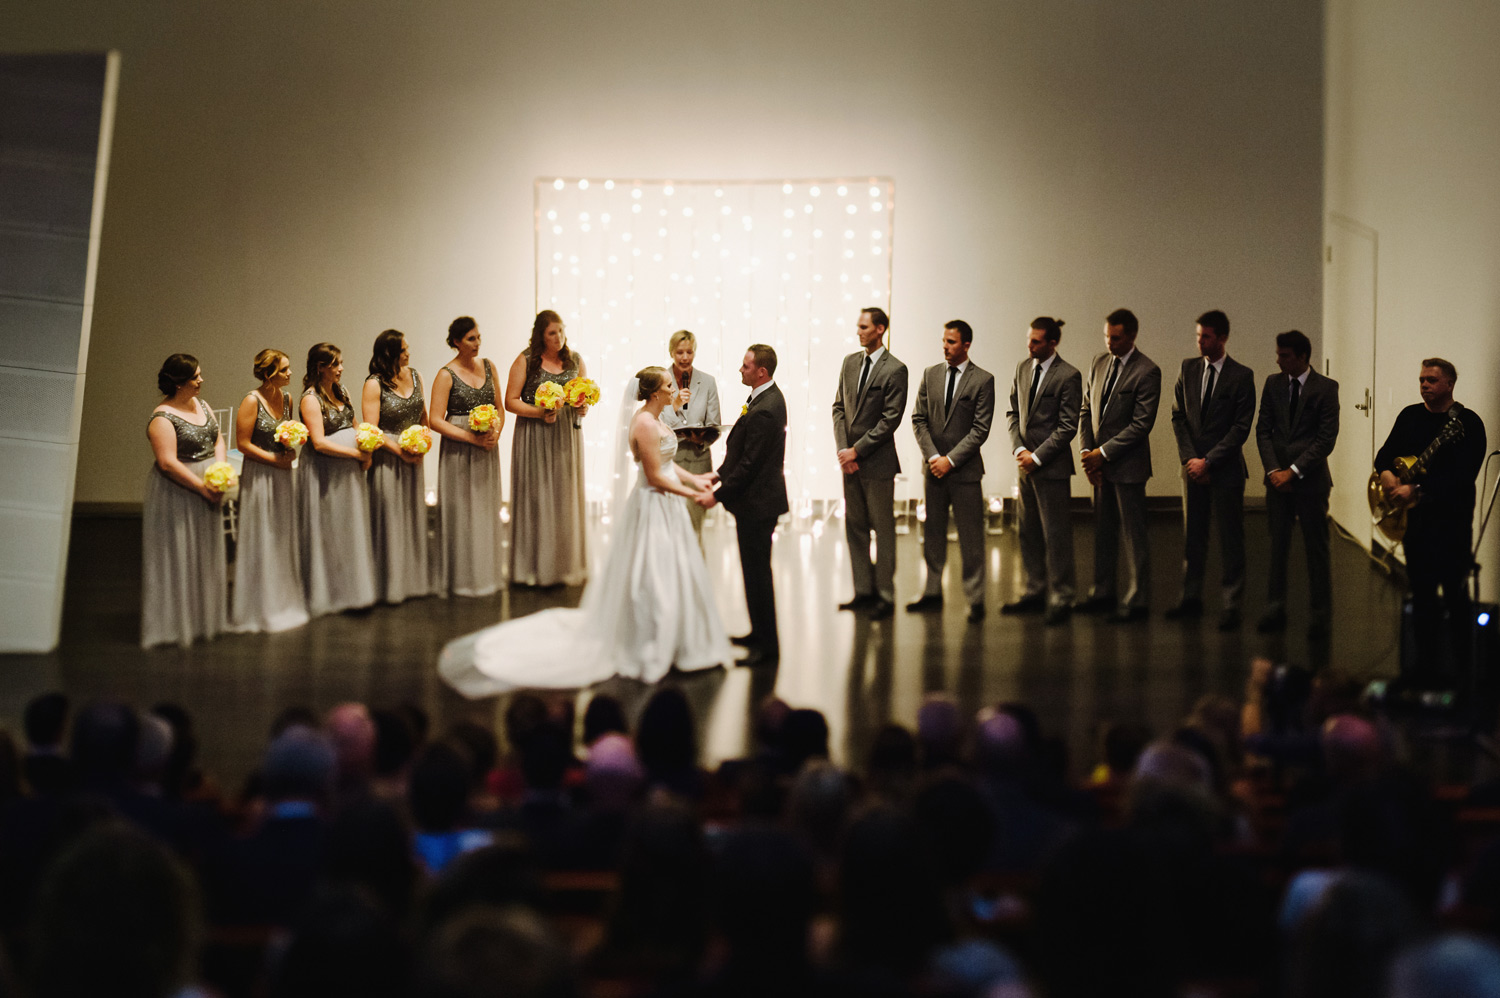 Edmonton-AGA-Gallery-Wedding-Photography-Erica-Shawn